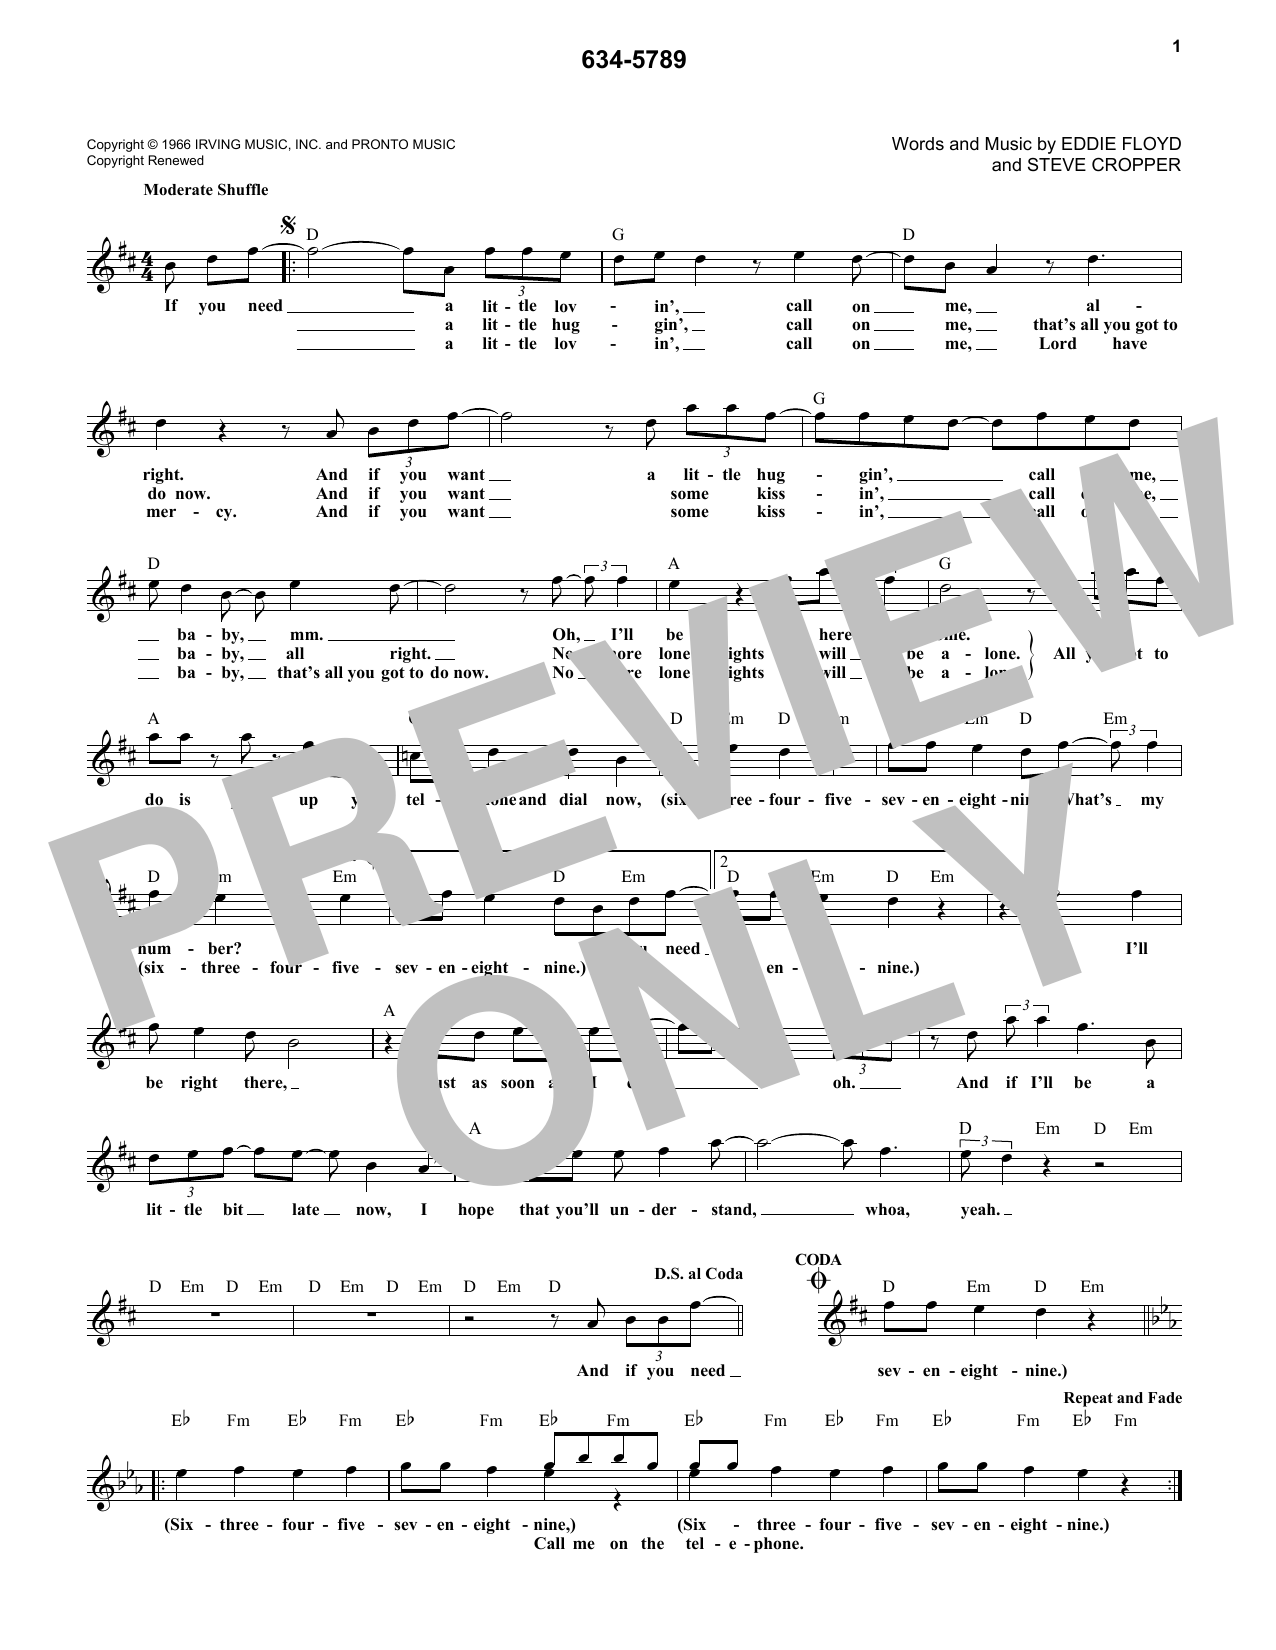 Download Wilson Pickett 634-5789 Sheet Music